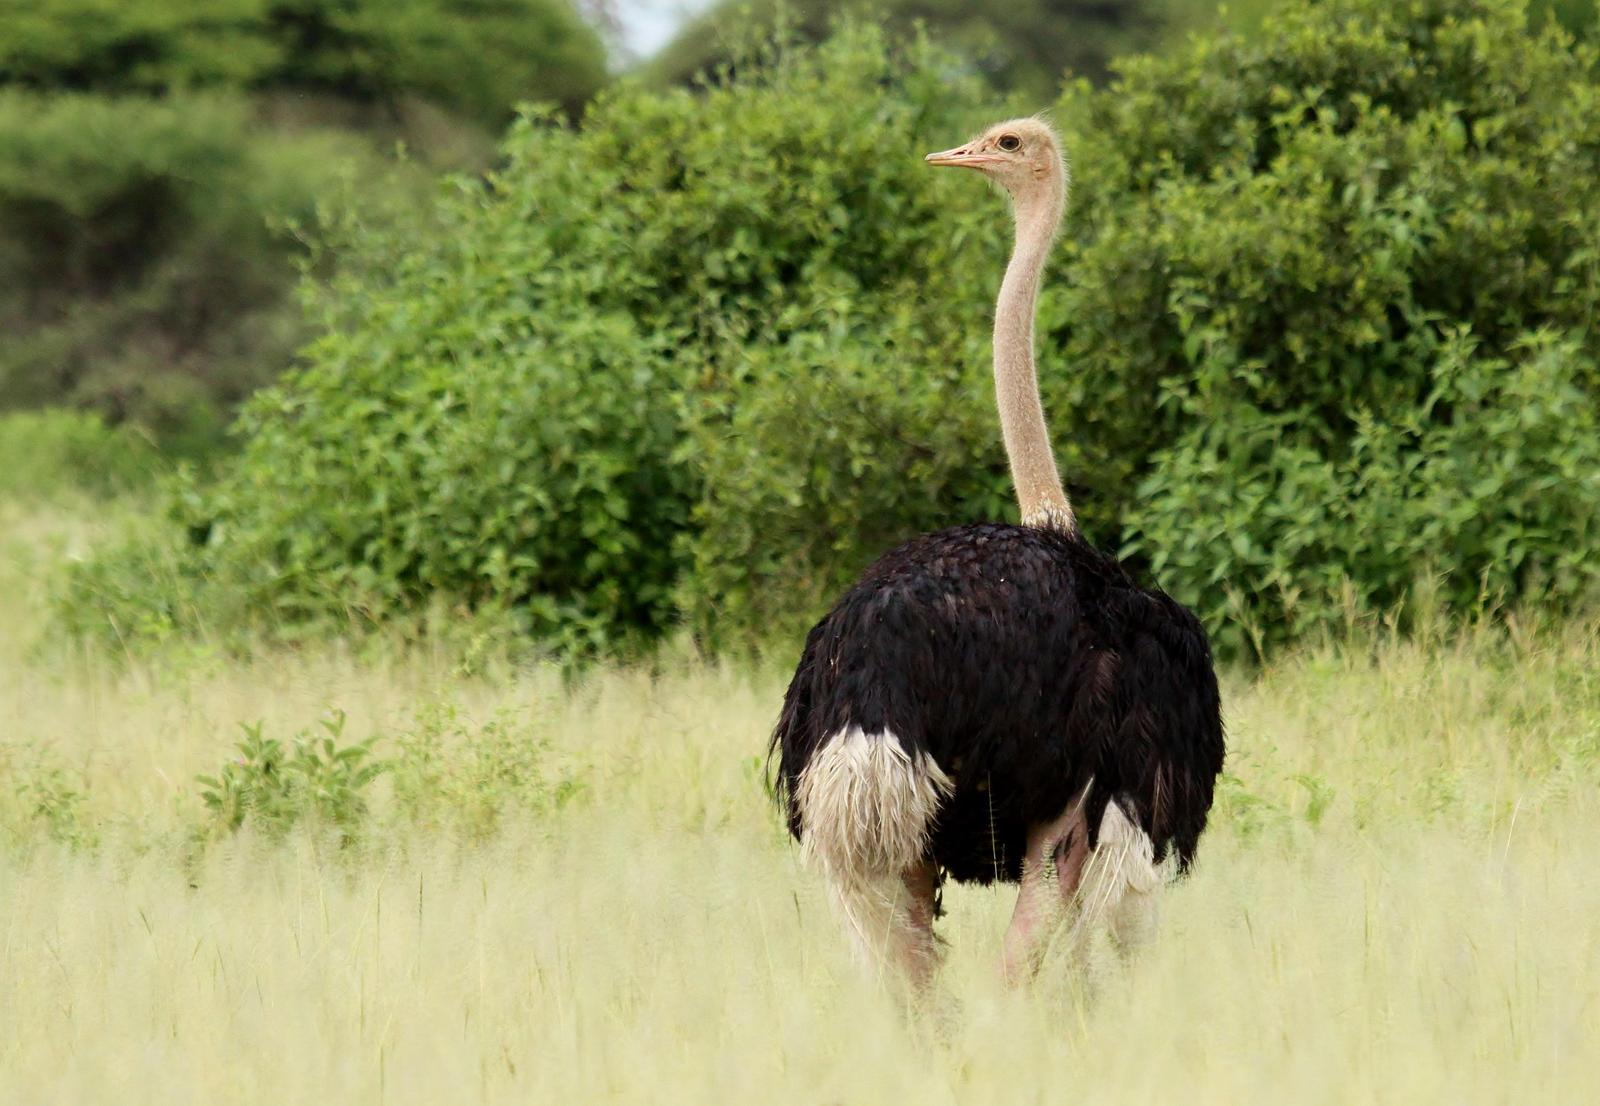 Common Ostrich Photo by Matthew McCluskey